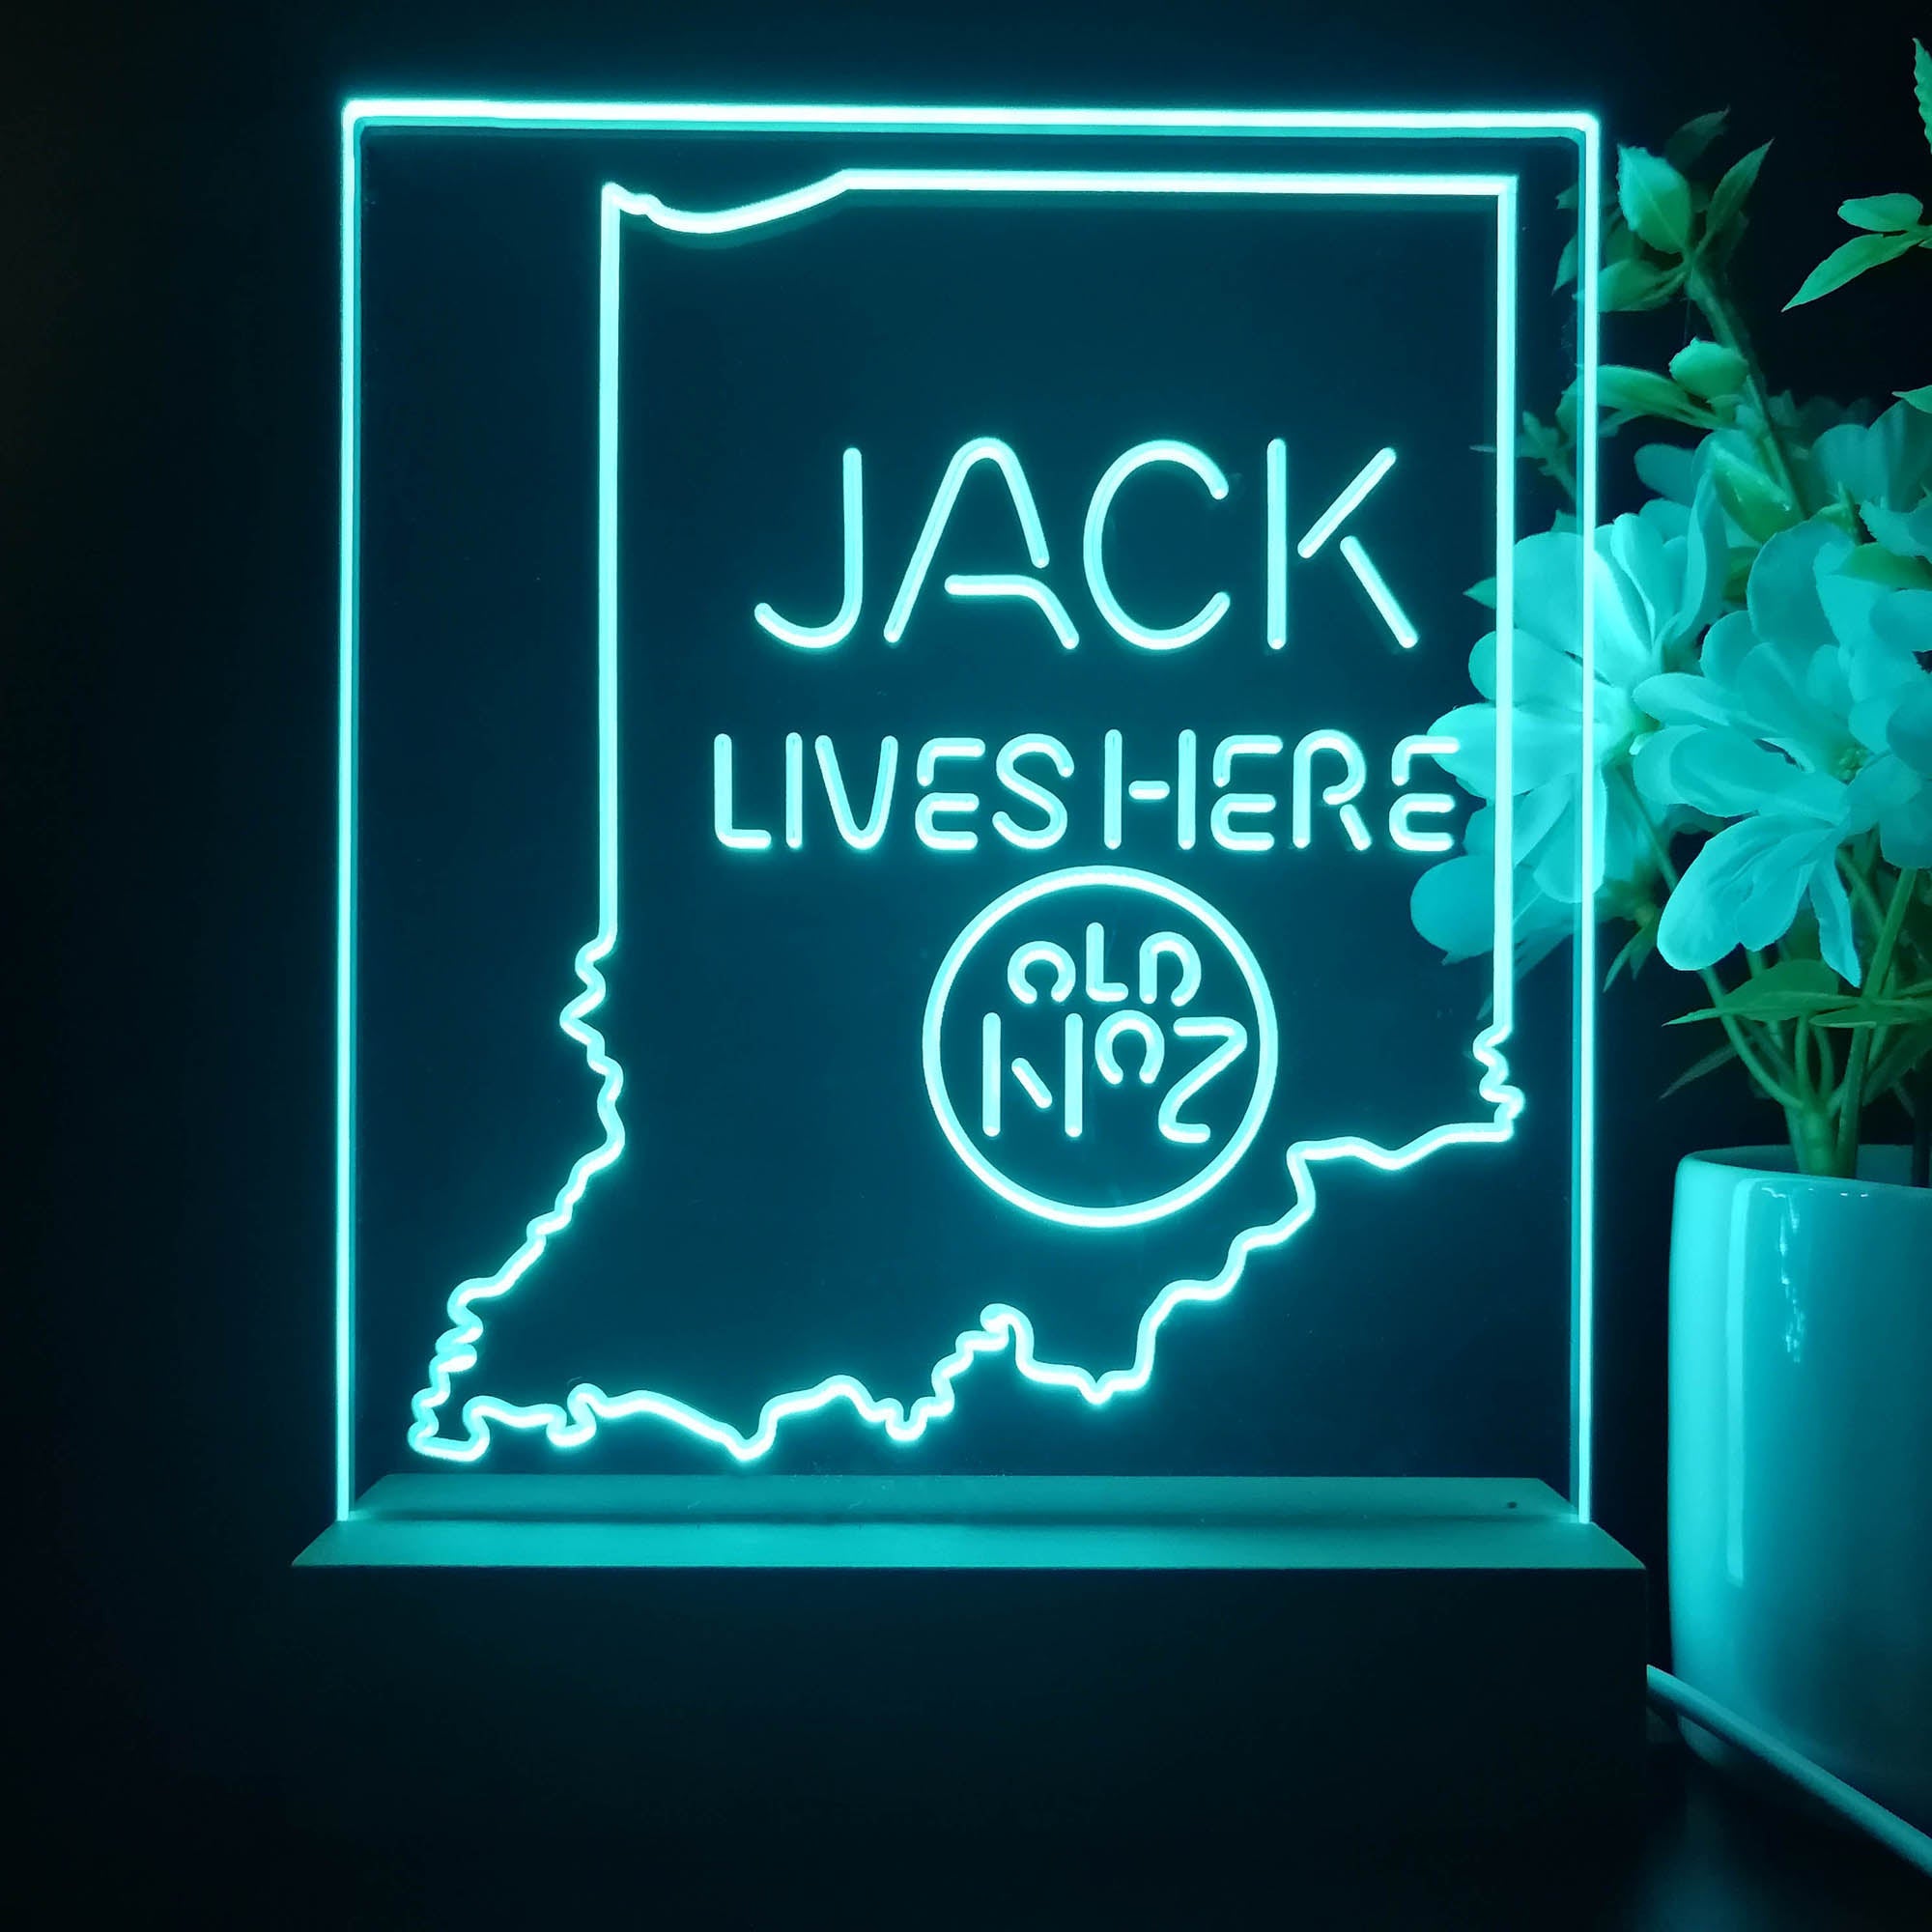 Indiana Jack Lives Here Night Light Neon Pub Bar Lamp